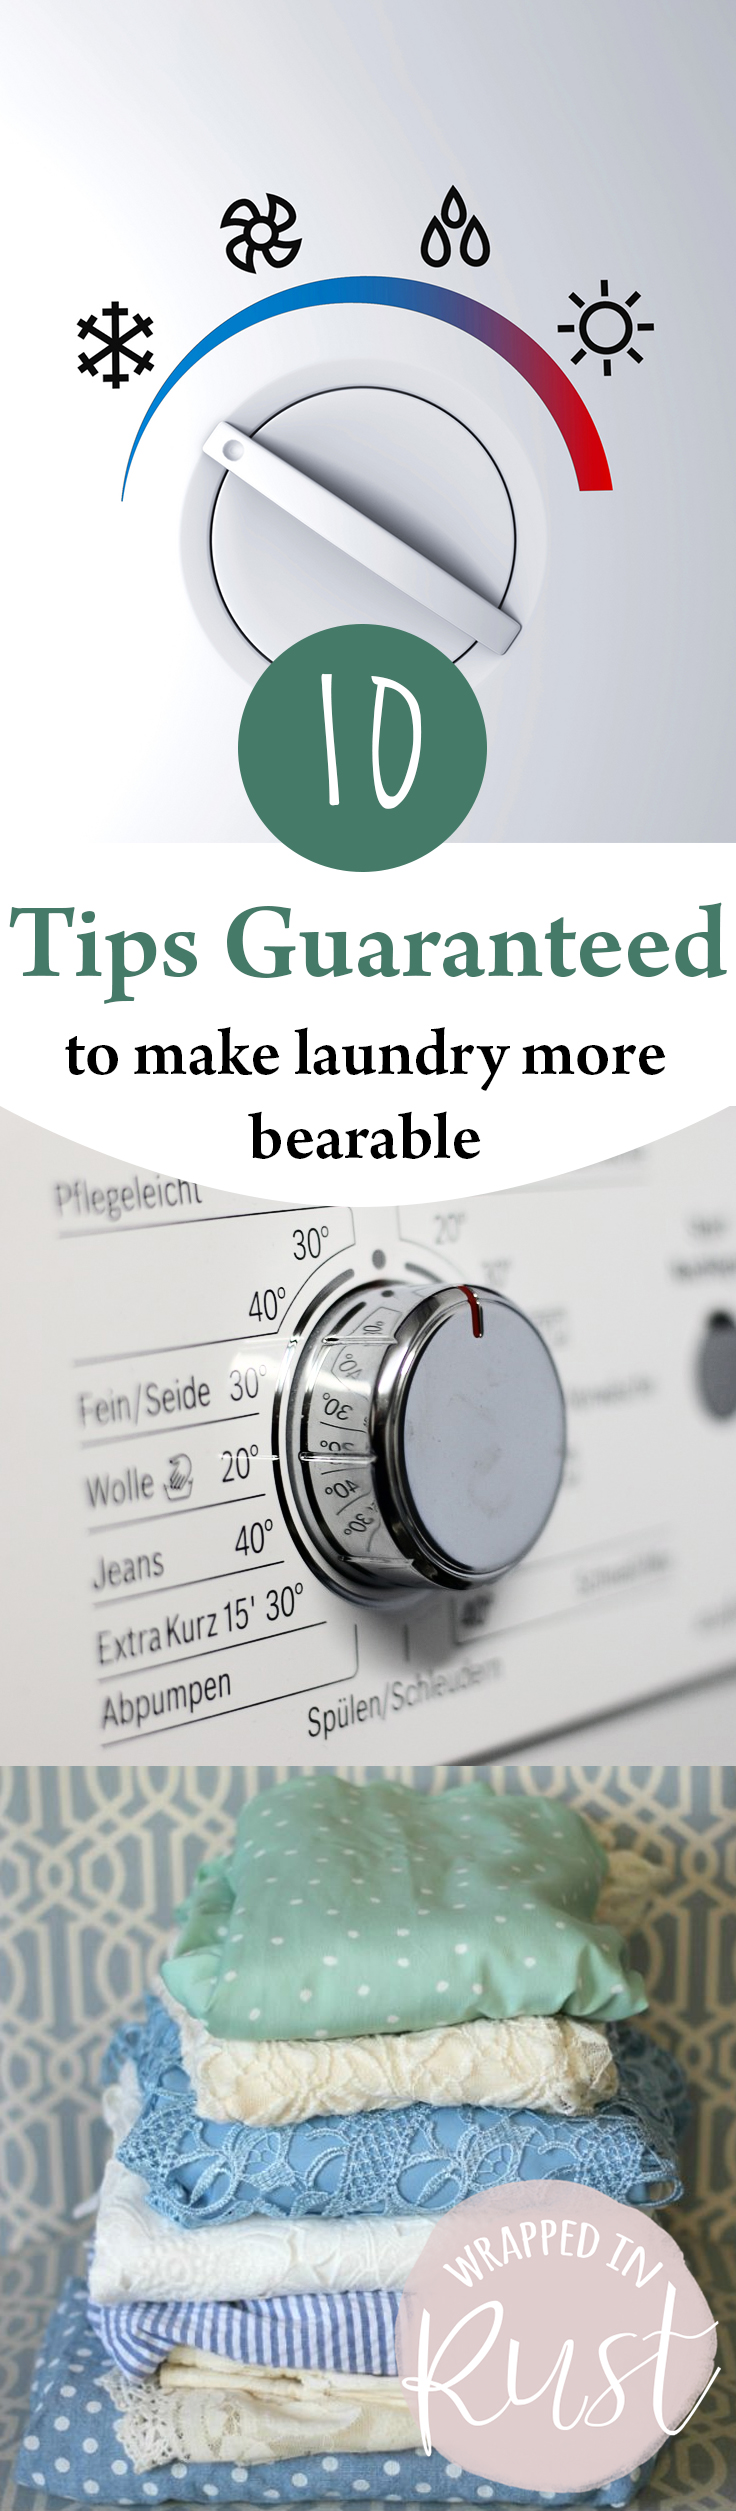 10 Tips Guaranteed to Make Laundry More Bearable